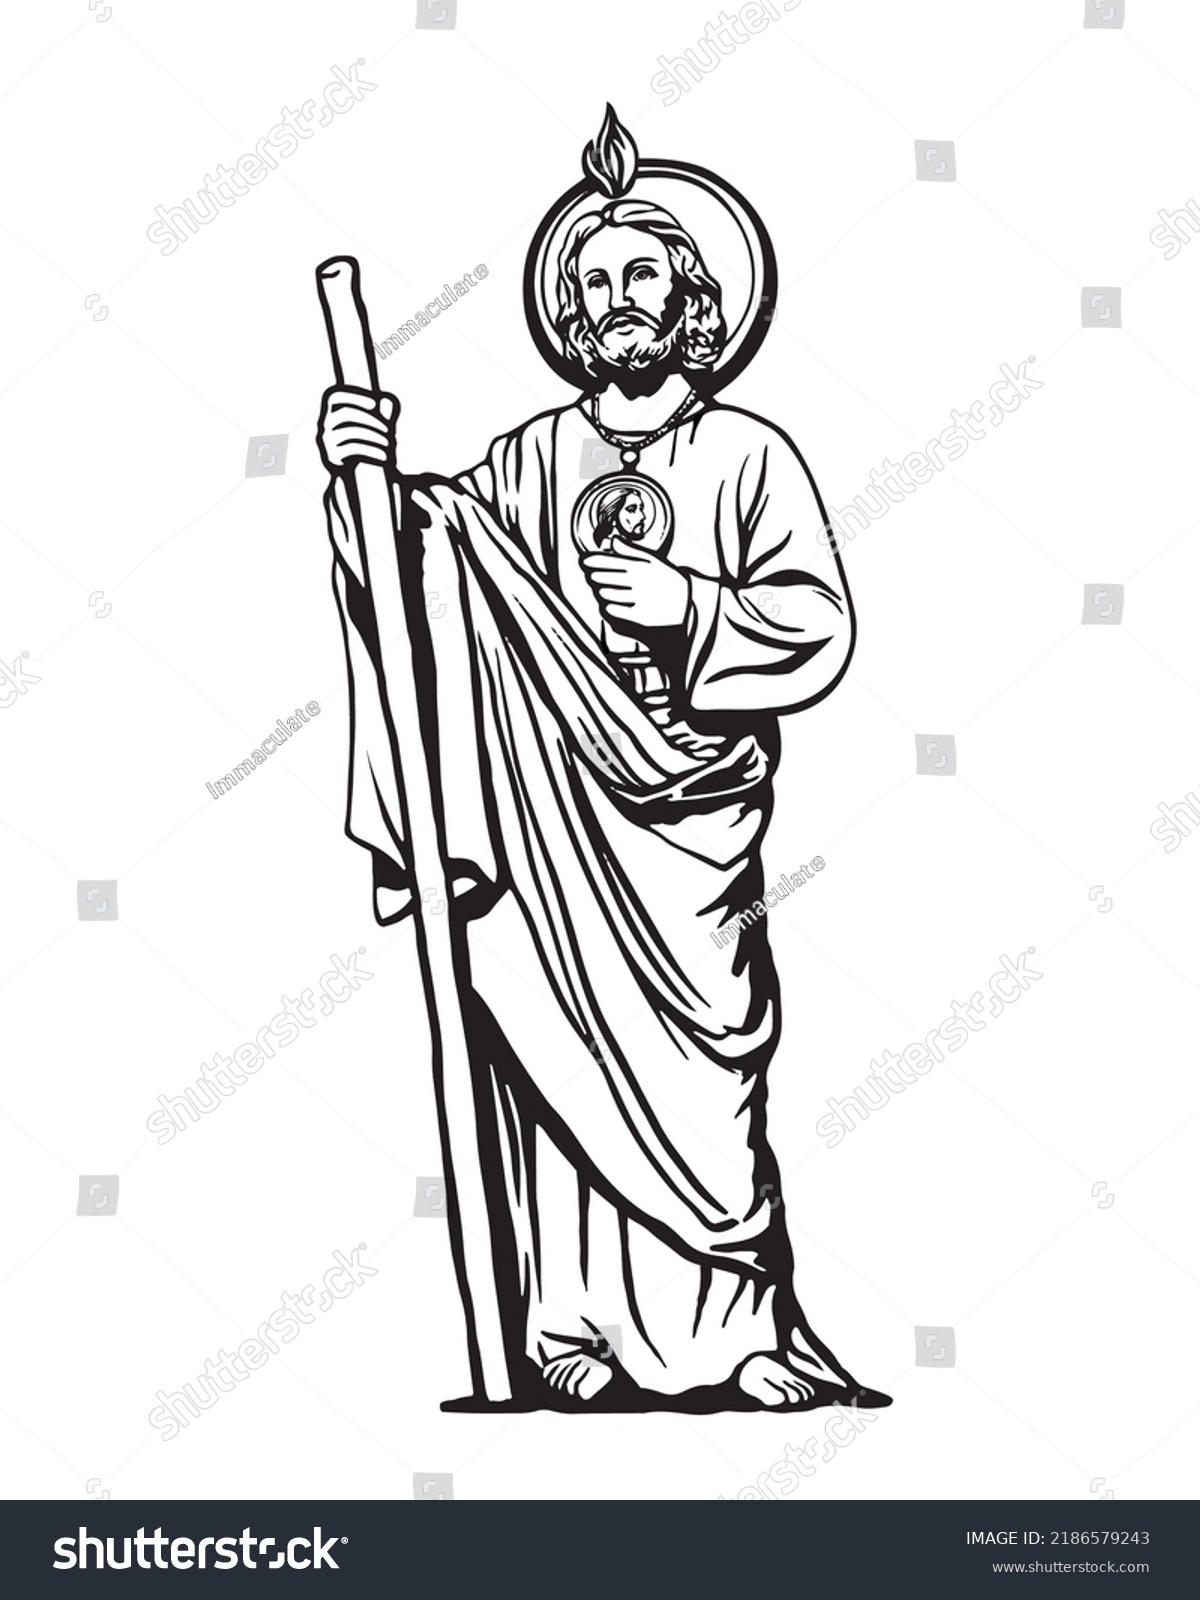 Saint Judethaddeus Apostle Jesus Christ Illustration Stock Vector